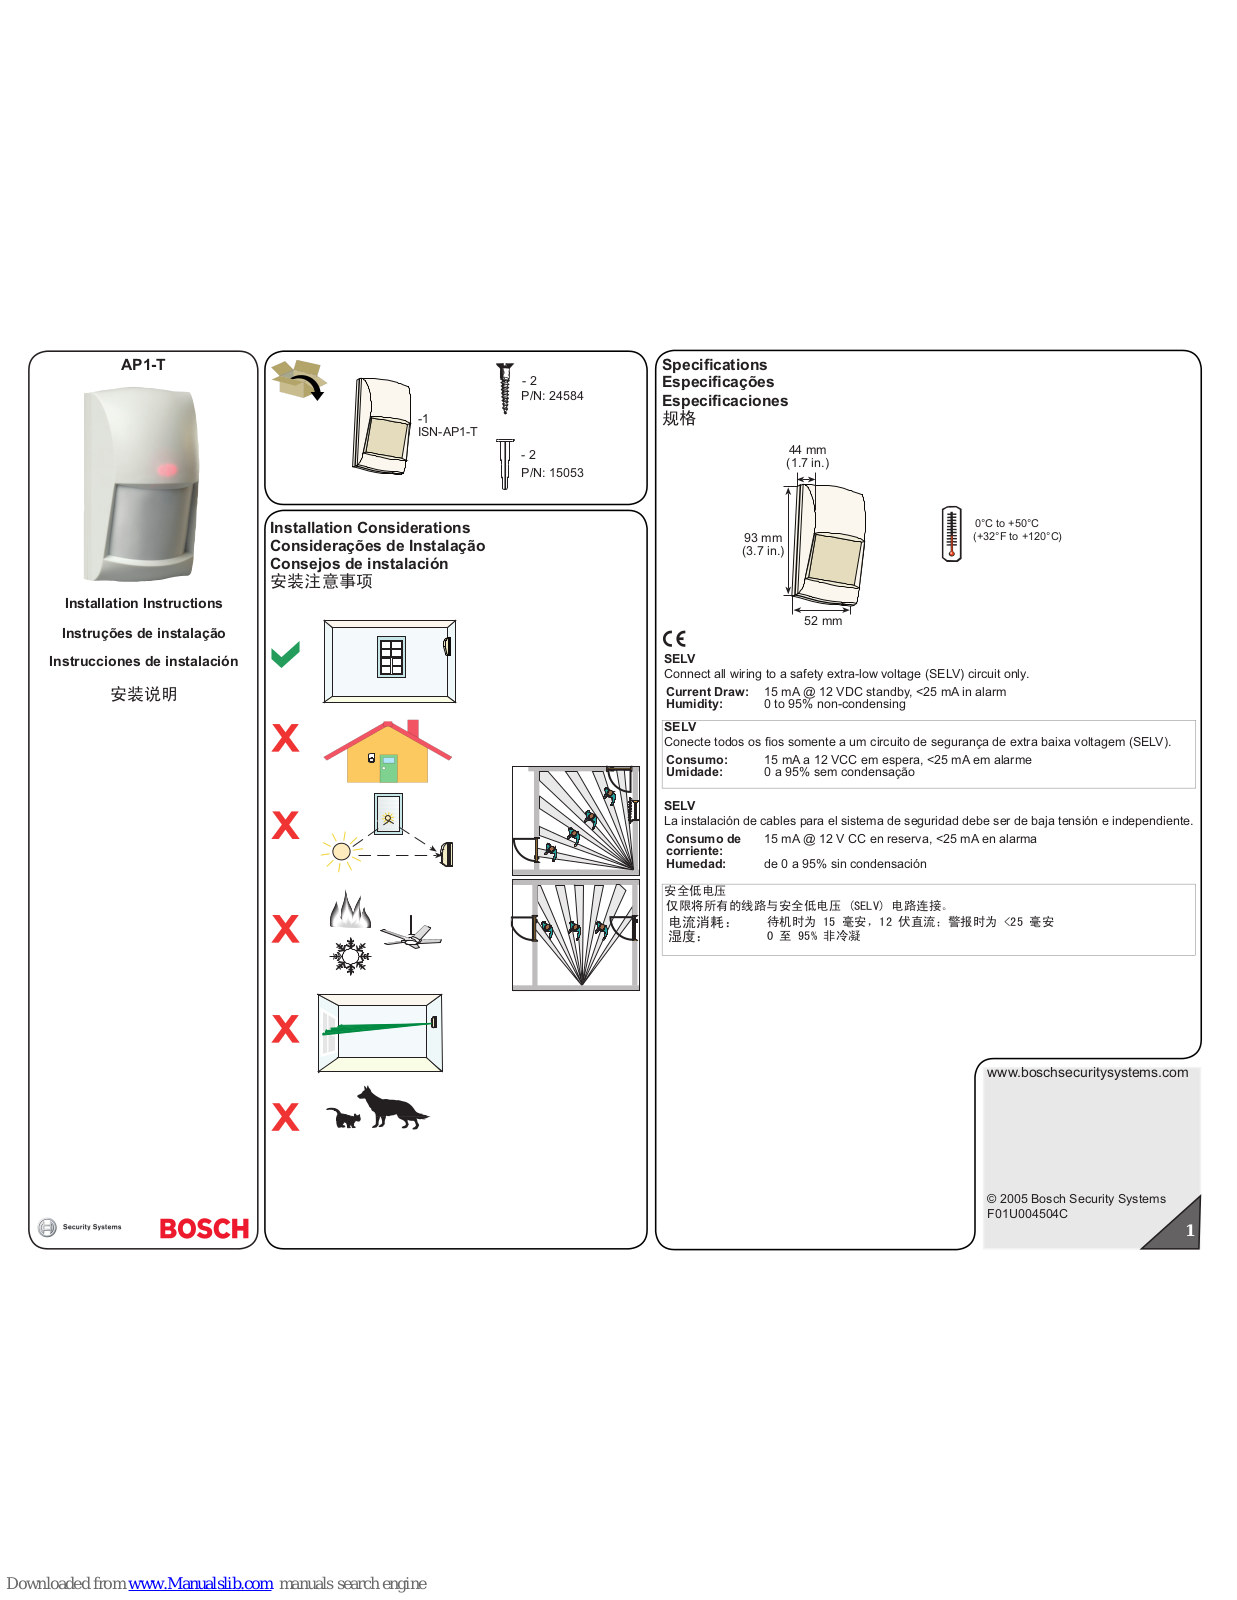 Bosch AP1-T, ISN-AP1 Installation Instructions Manual